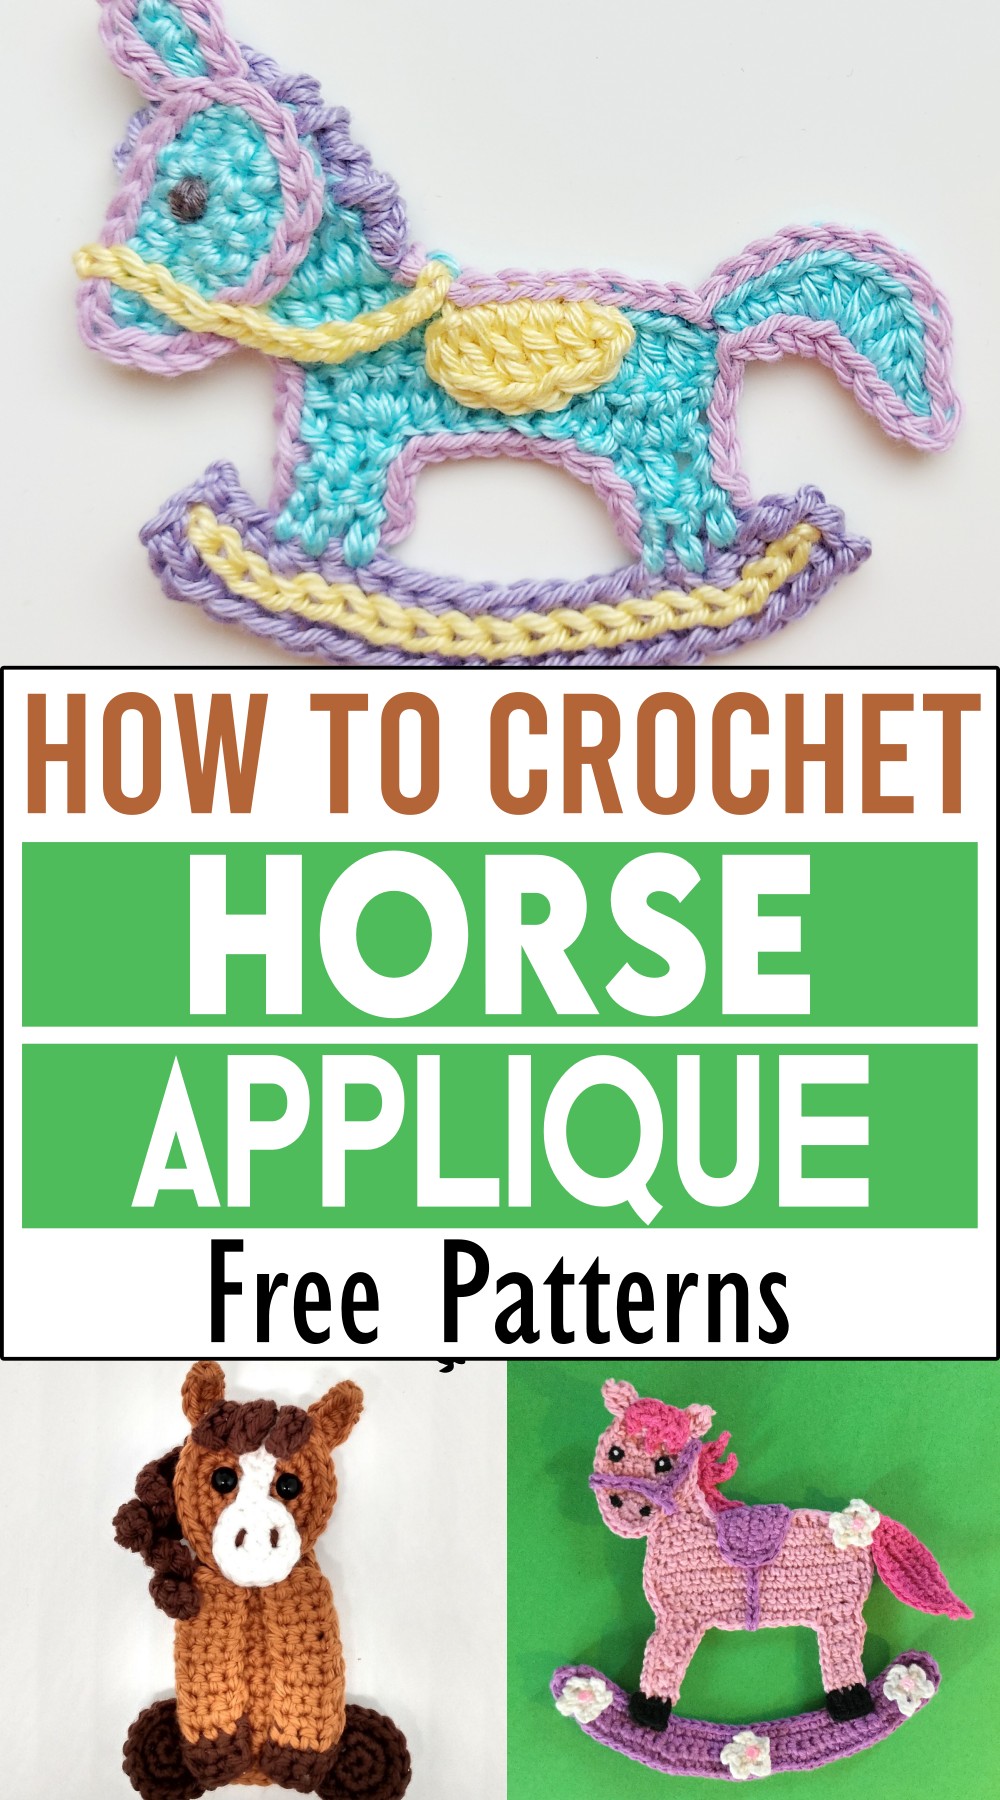 How to Crochet Horse Applique